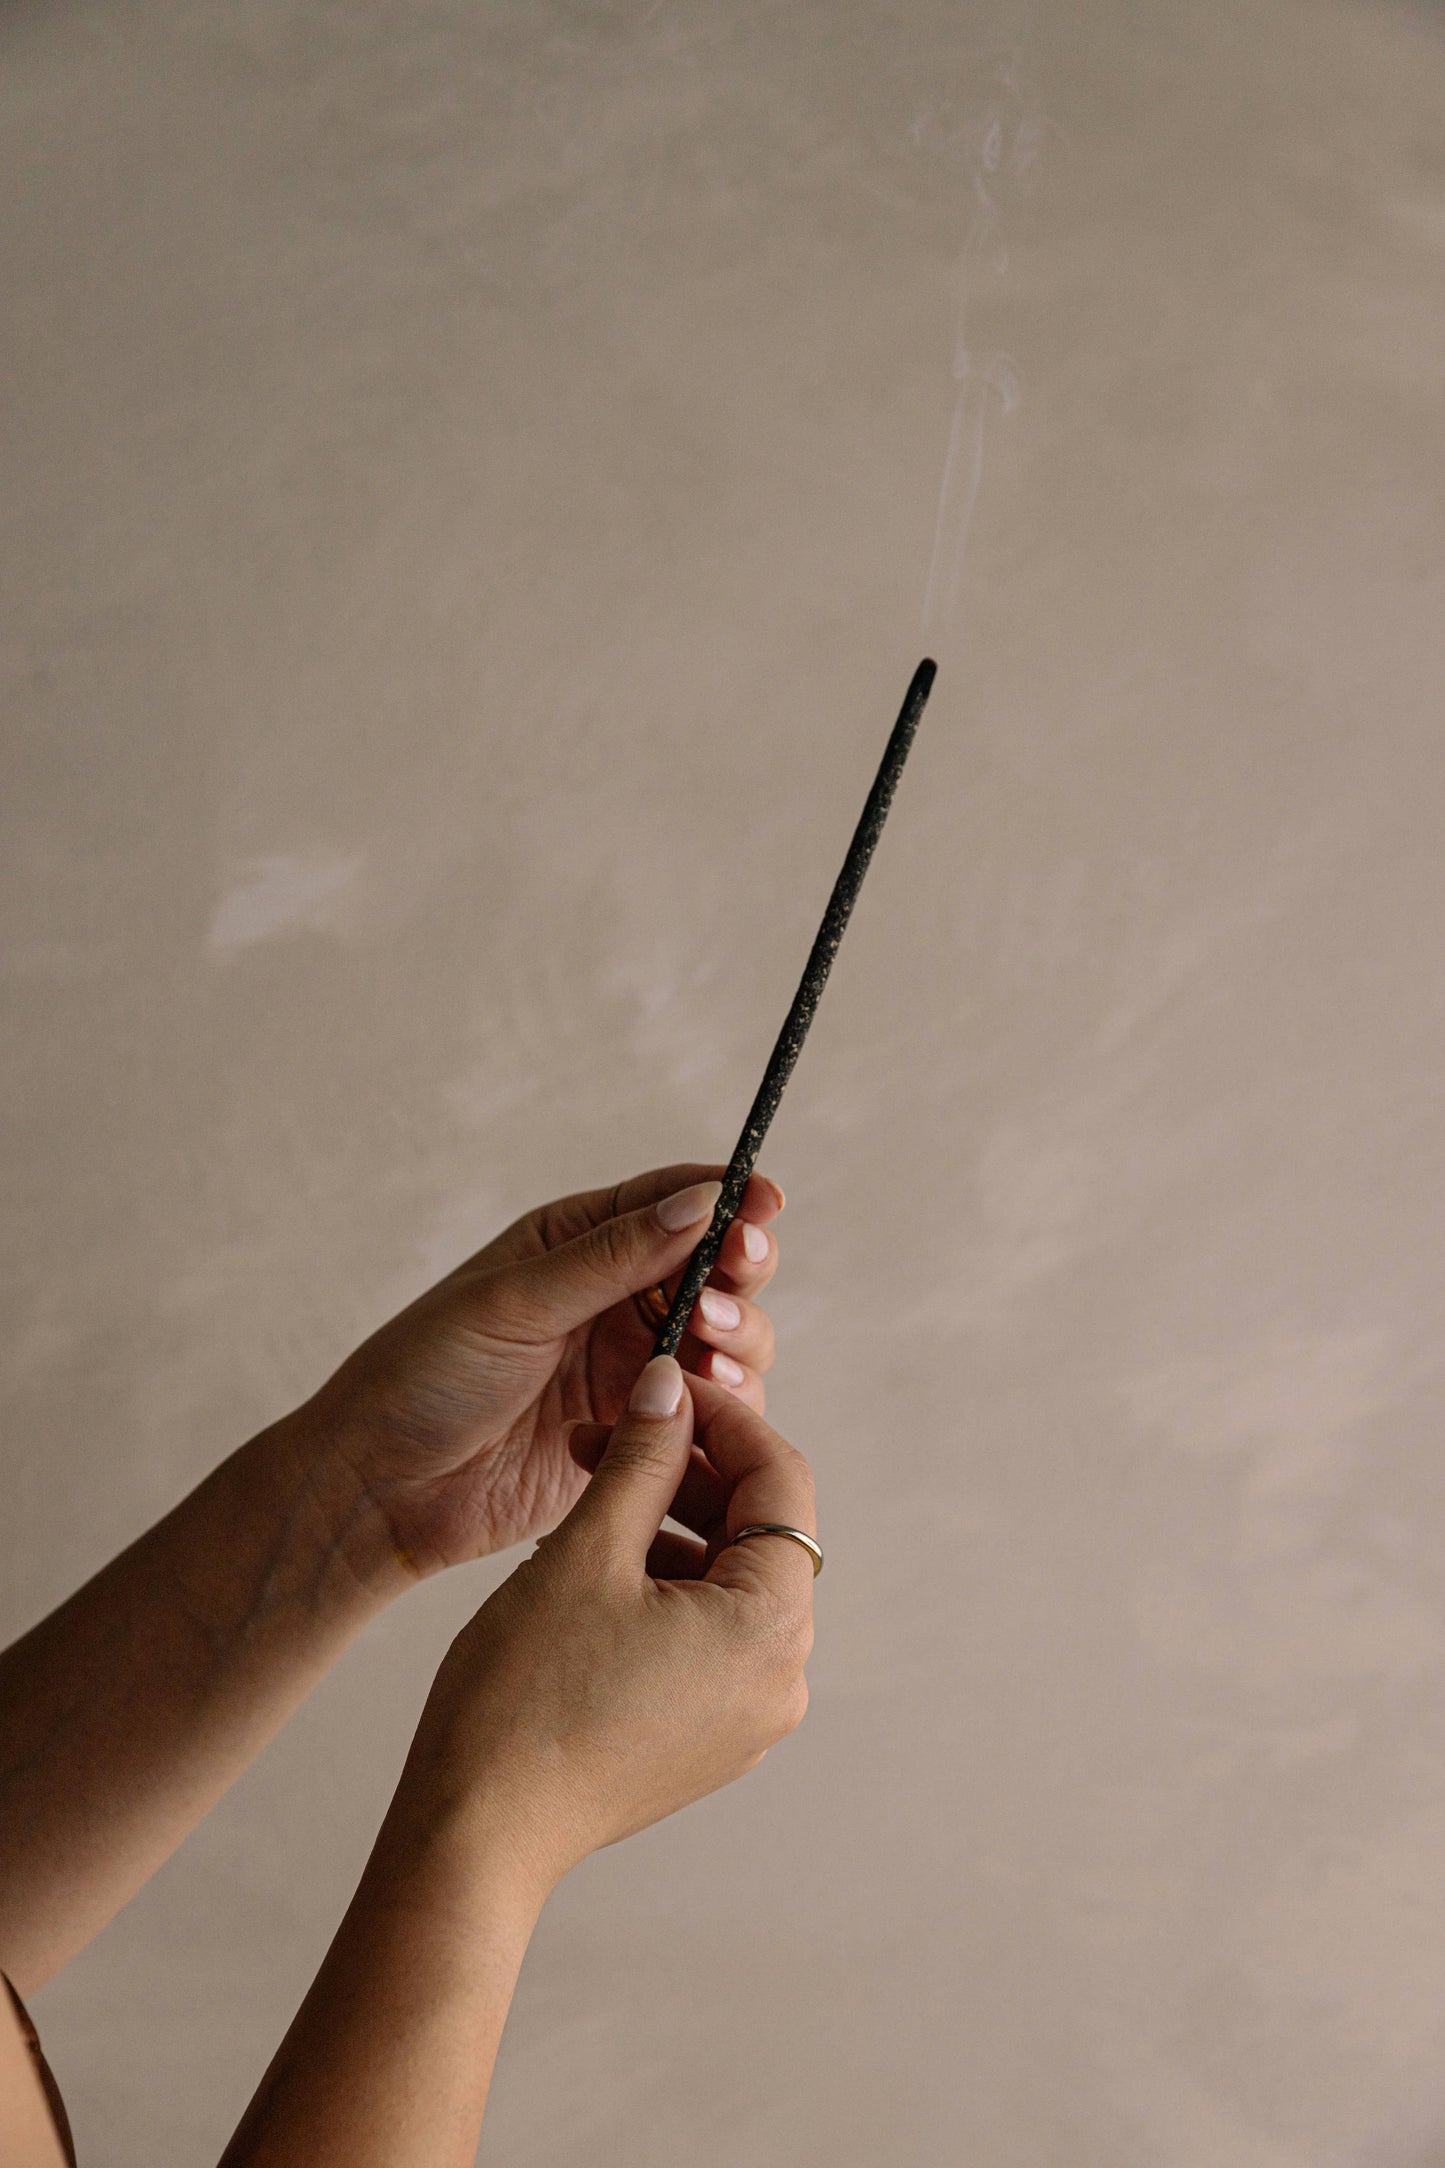 Black Copal Hand Rolled Incense Stick